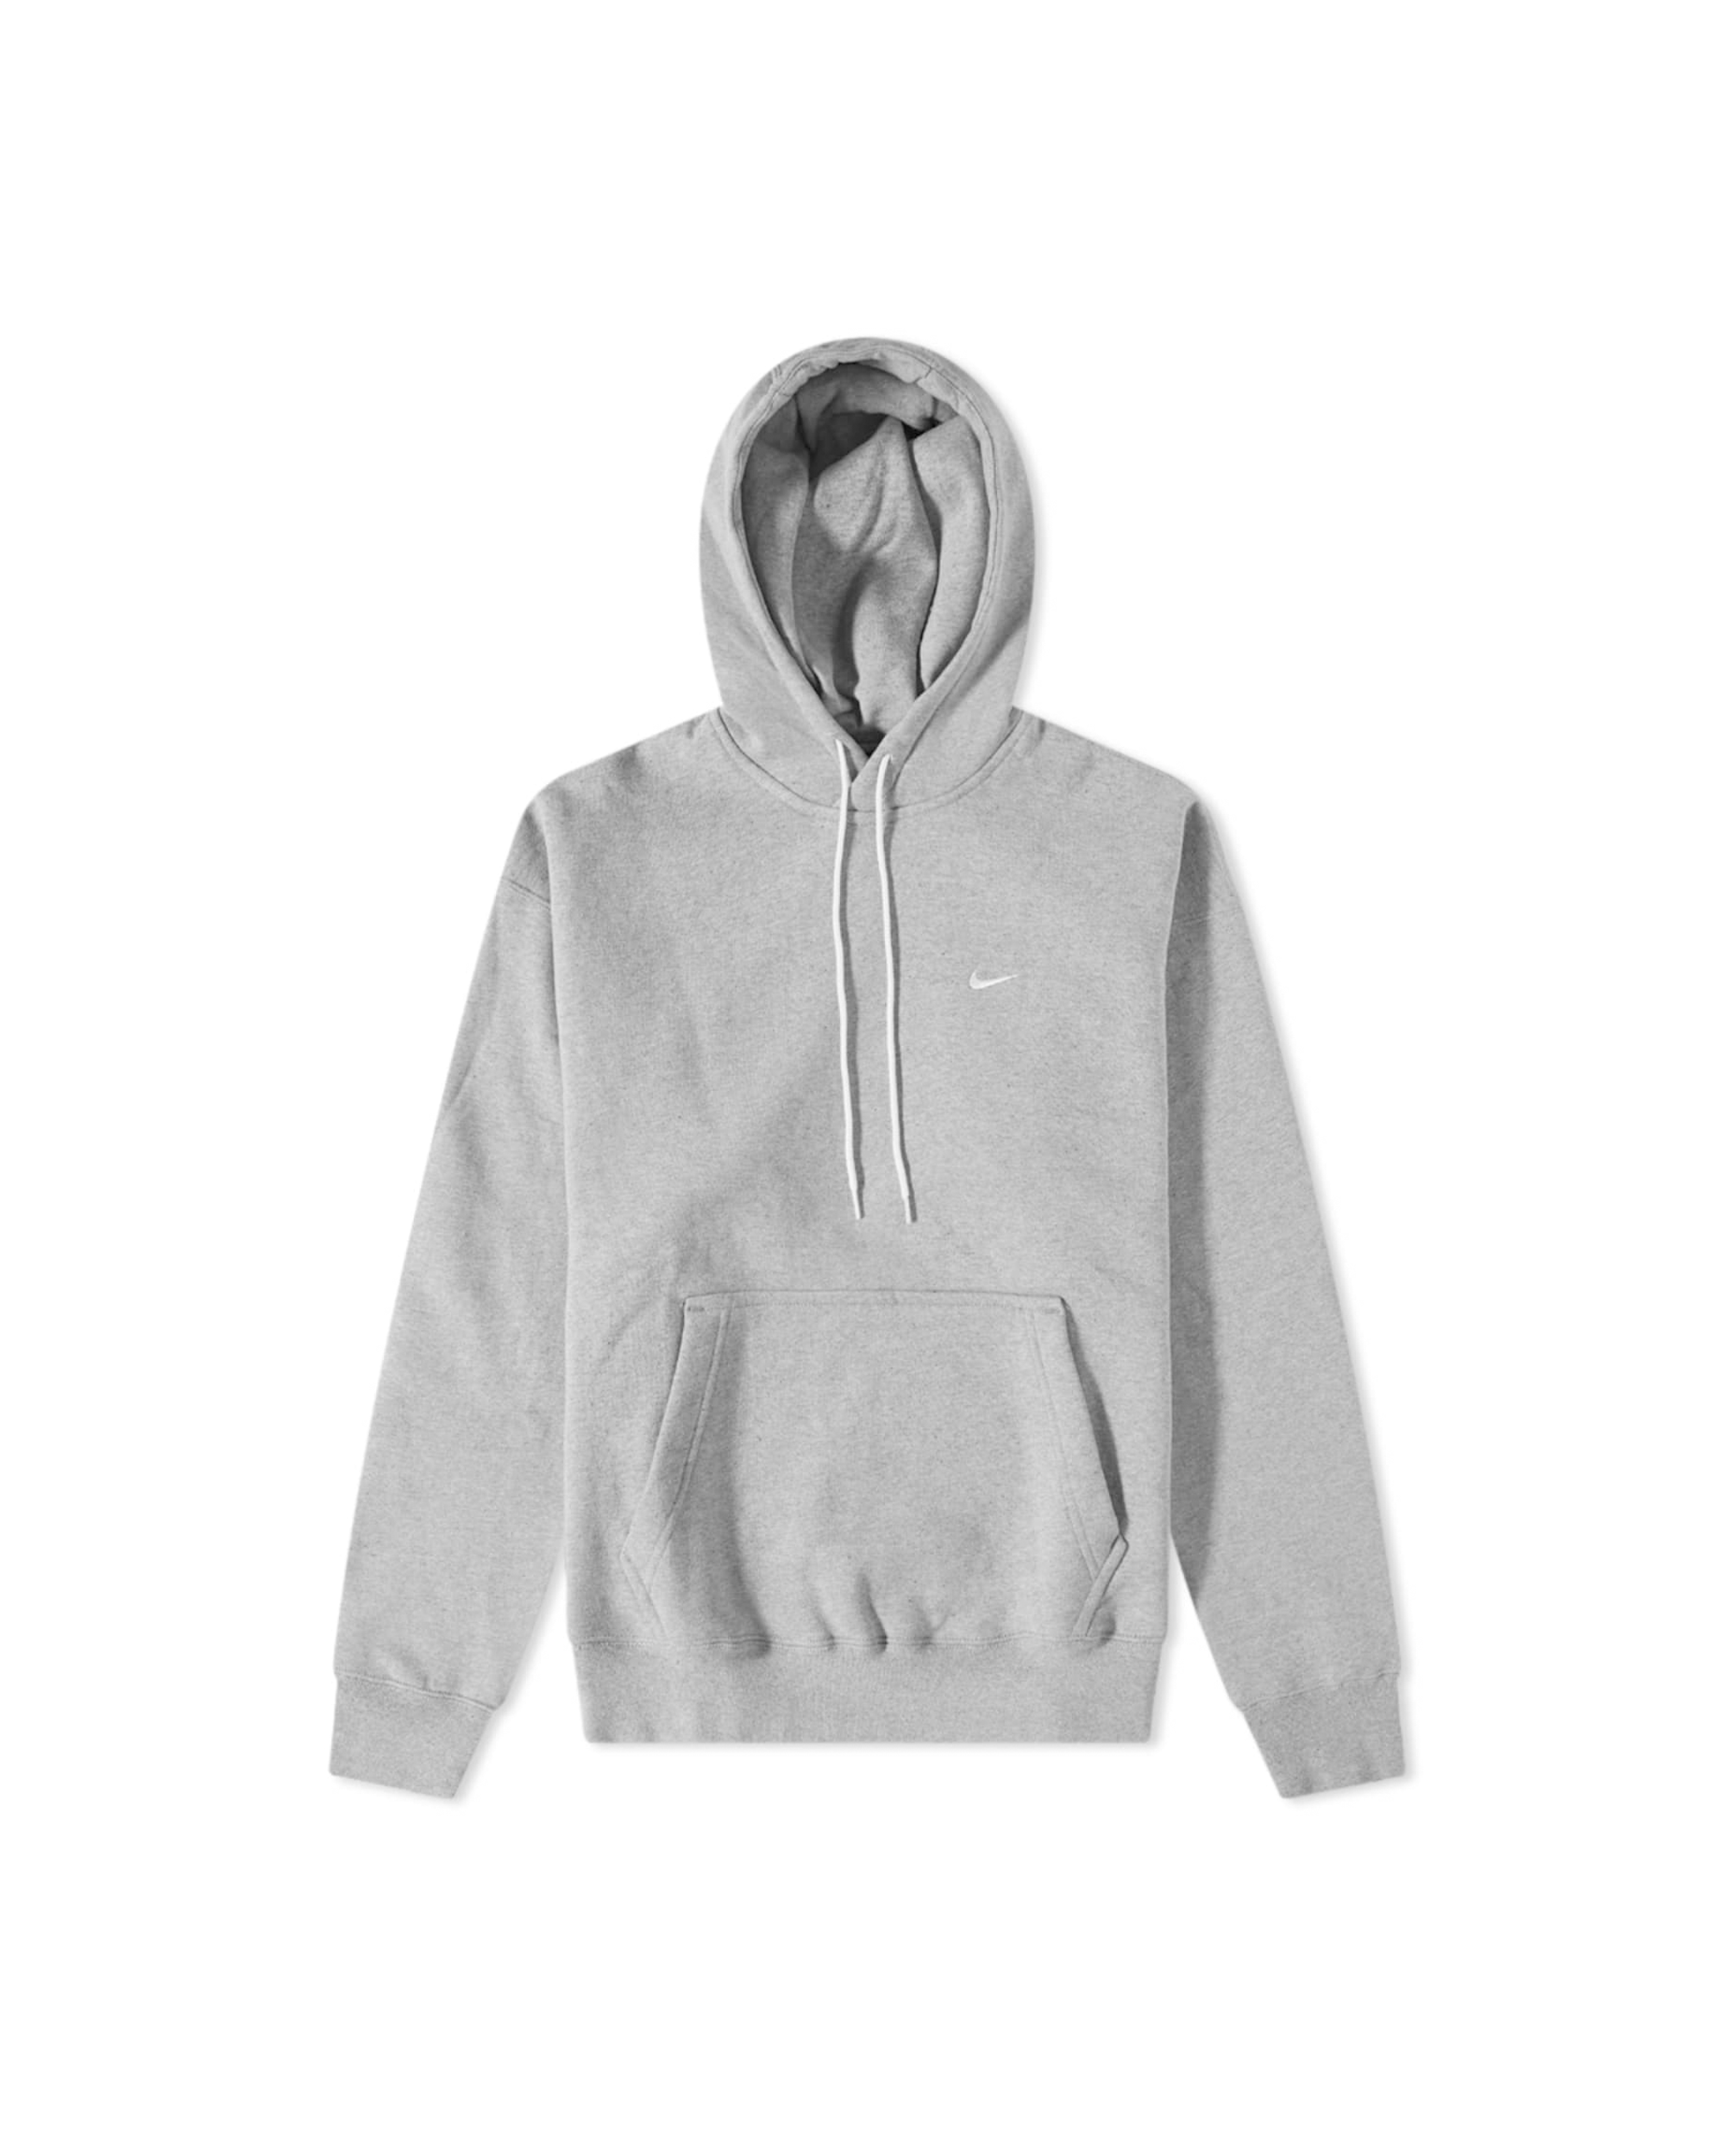 Solo Swoosh Hooded Sweatshirt - Dark Gray Heather / White